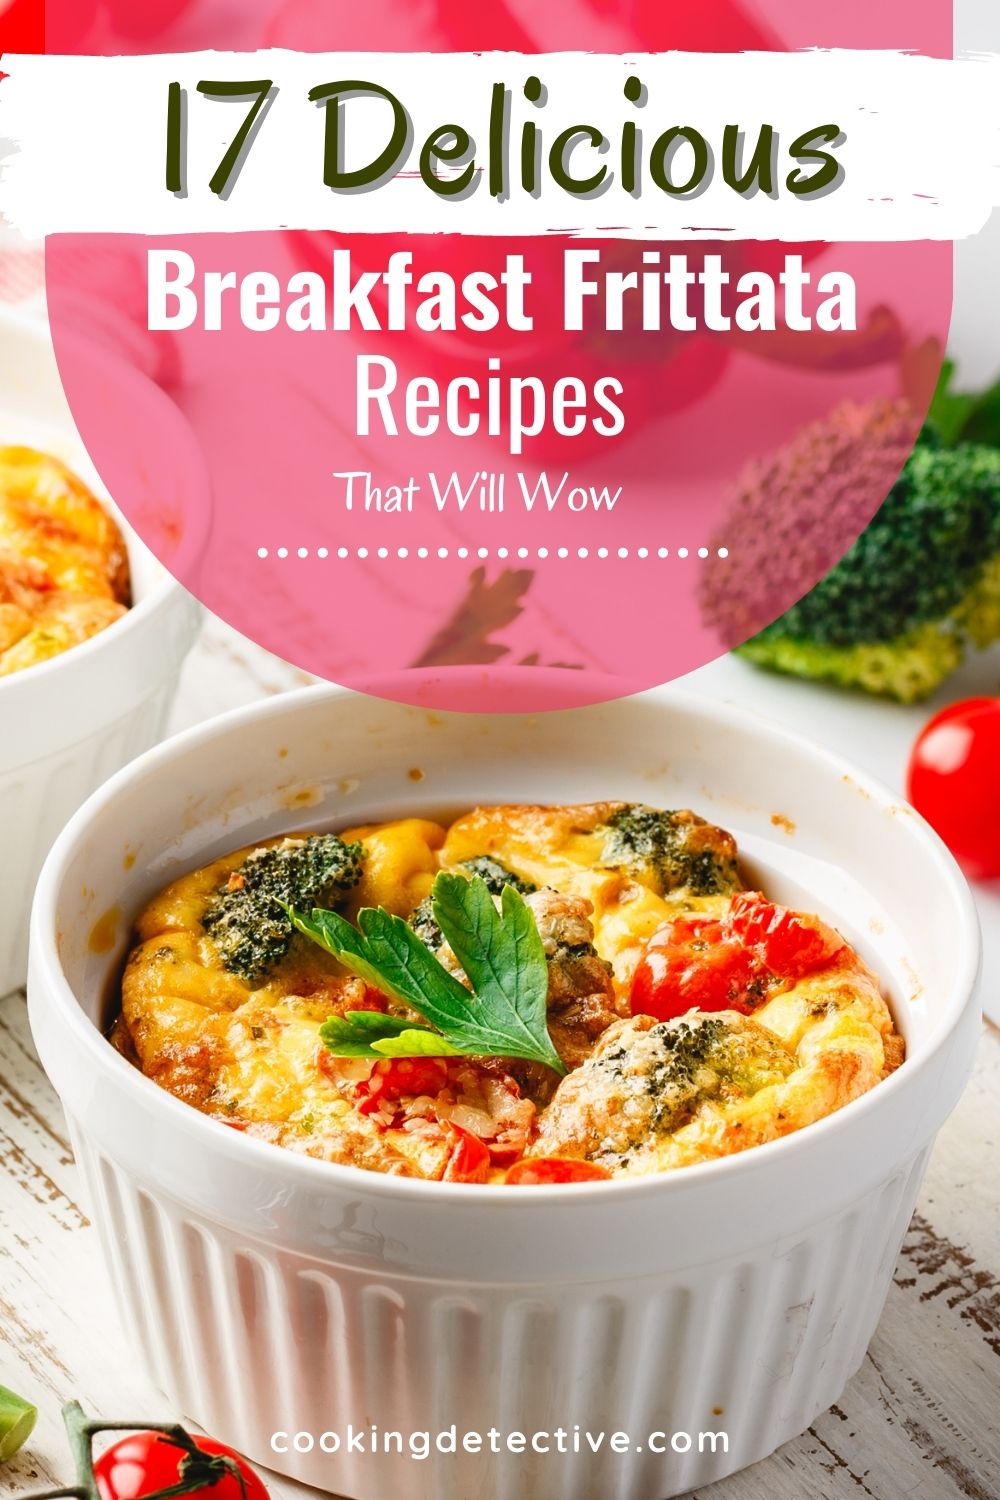 Breakfast Frittata Recipes